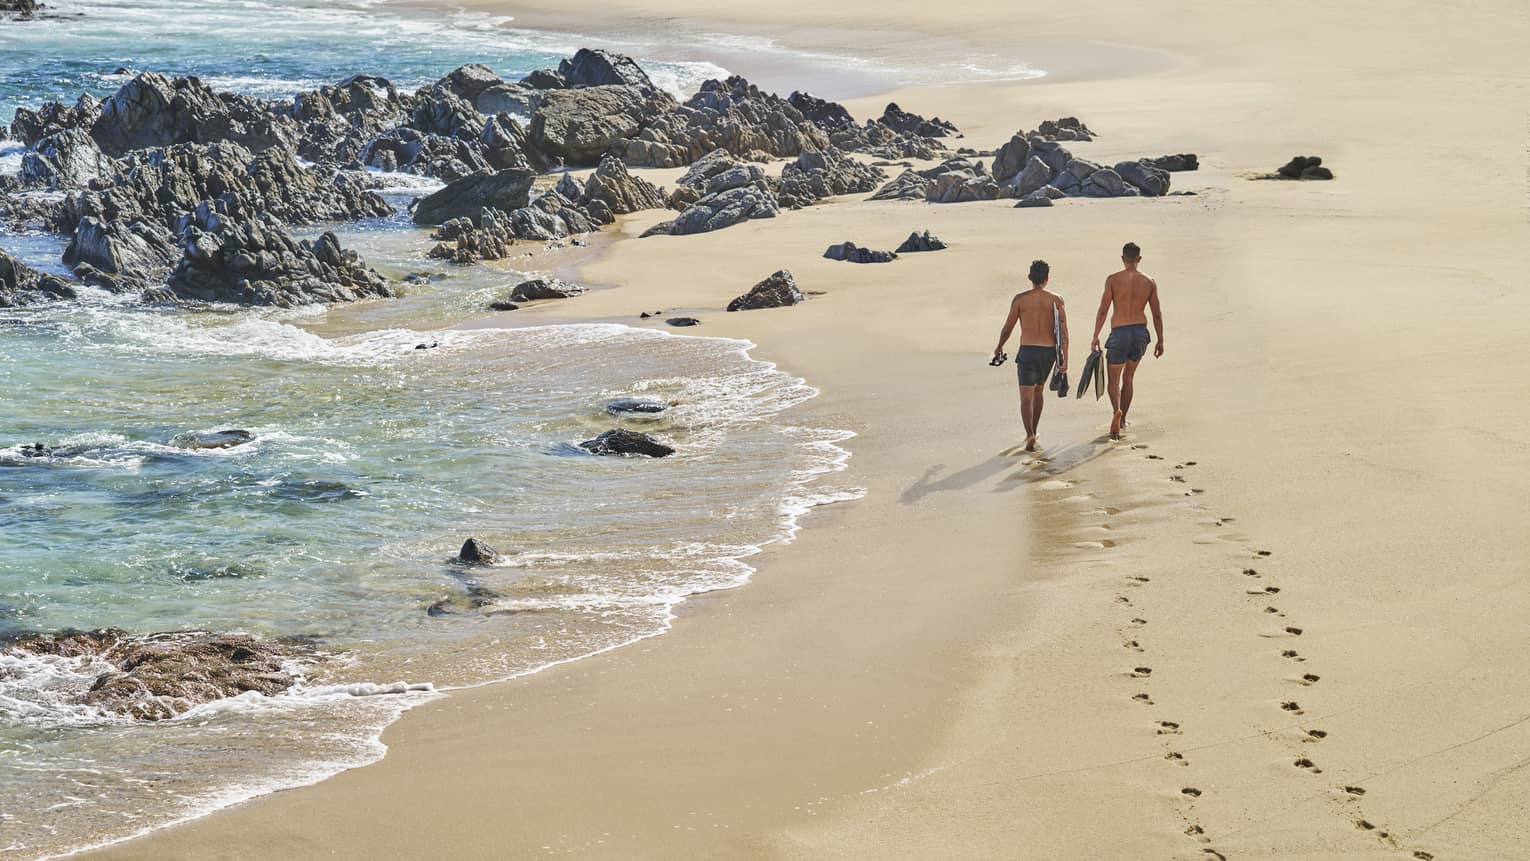 Two people walking on a sandy beach